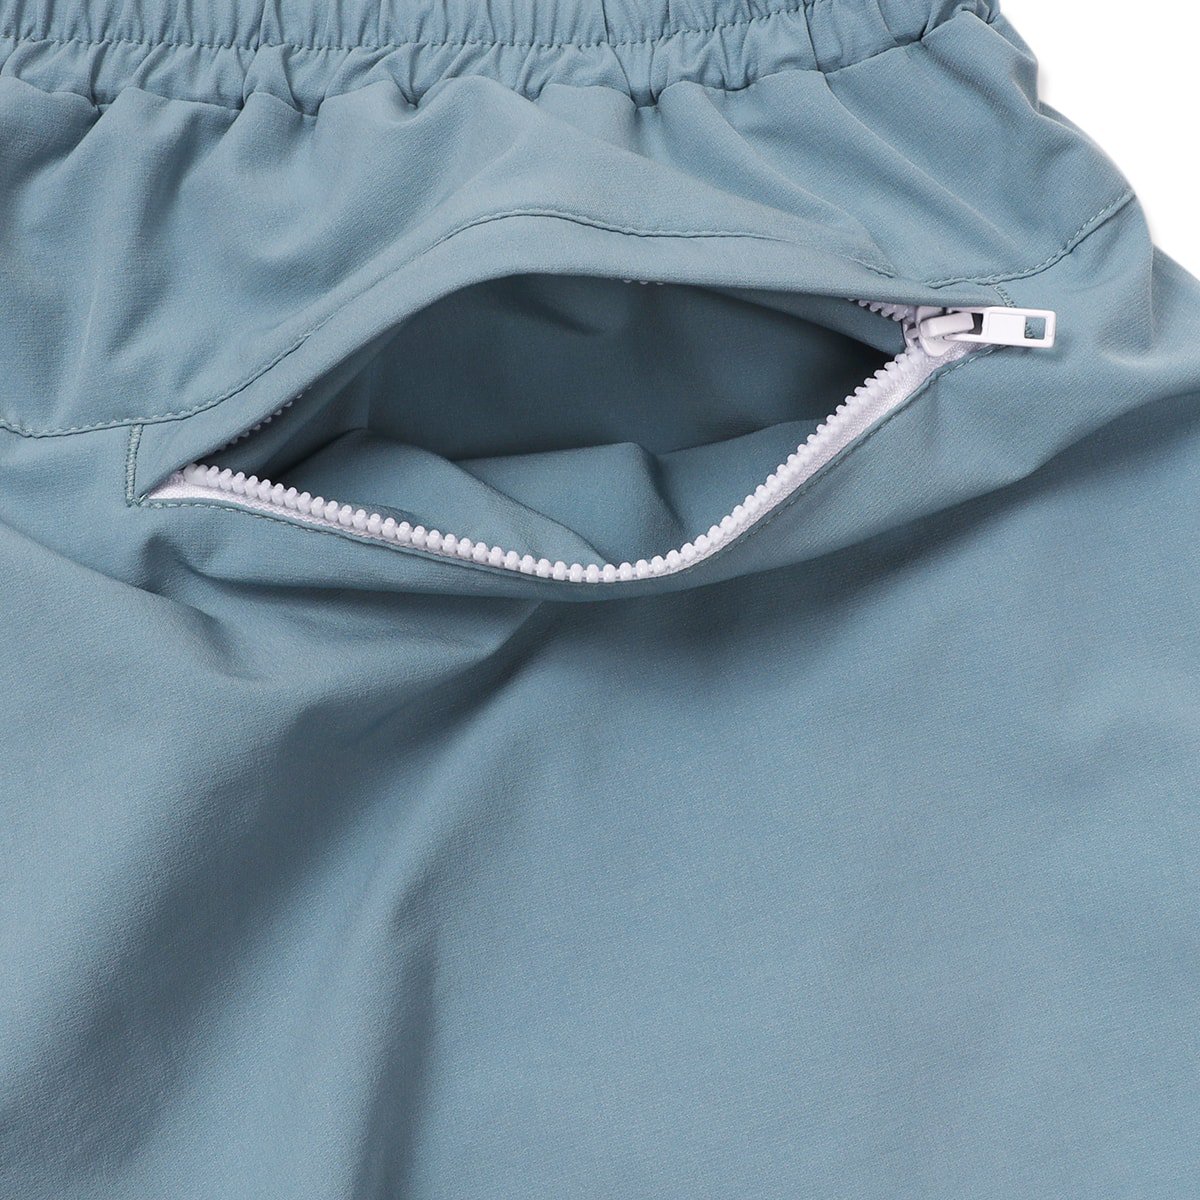 classic track pants【stone blue】 - Arch ☆ アーチ [バスケットボール＆ライフスタイルウェア  Basketball&Lifestyle wear]